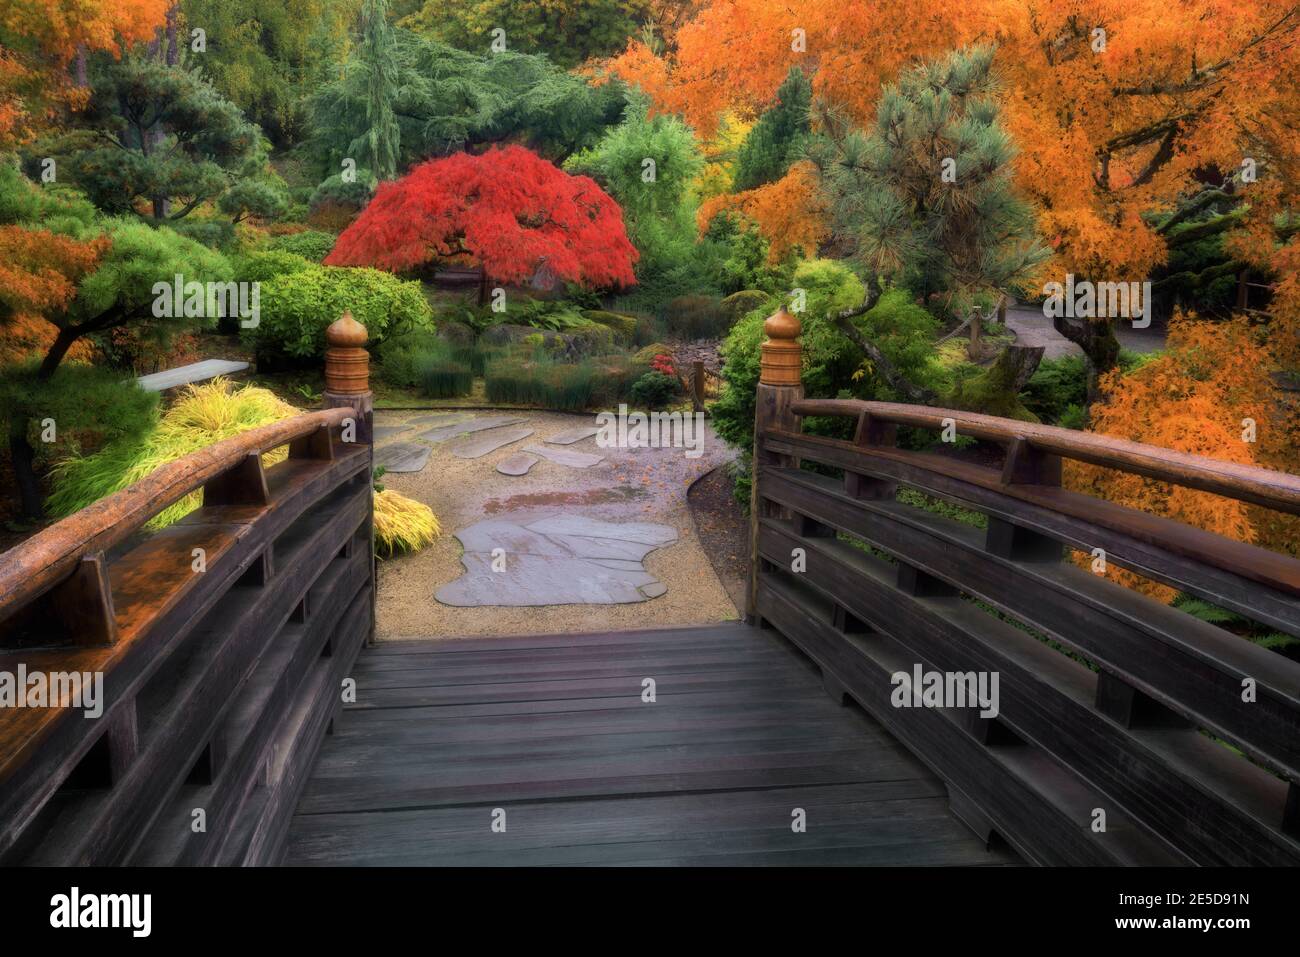 The Moon Bridge offers this pathway to the peak autumn colors found at the Tsuru Island Japanese Garden in Gresham, Oregon. Stock Photo